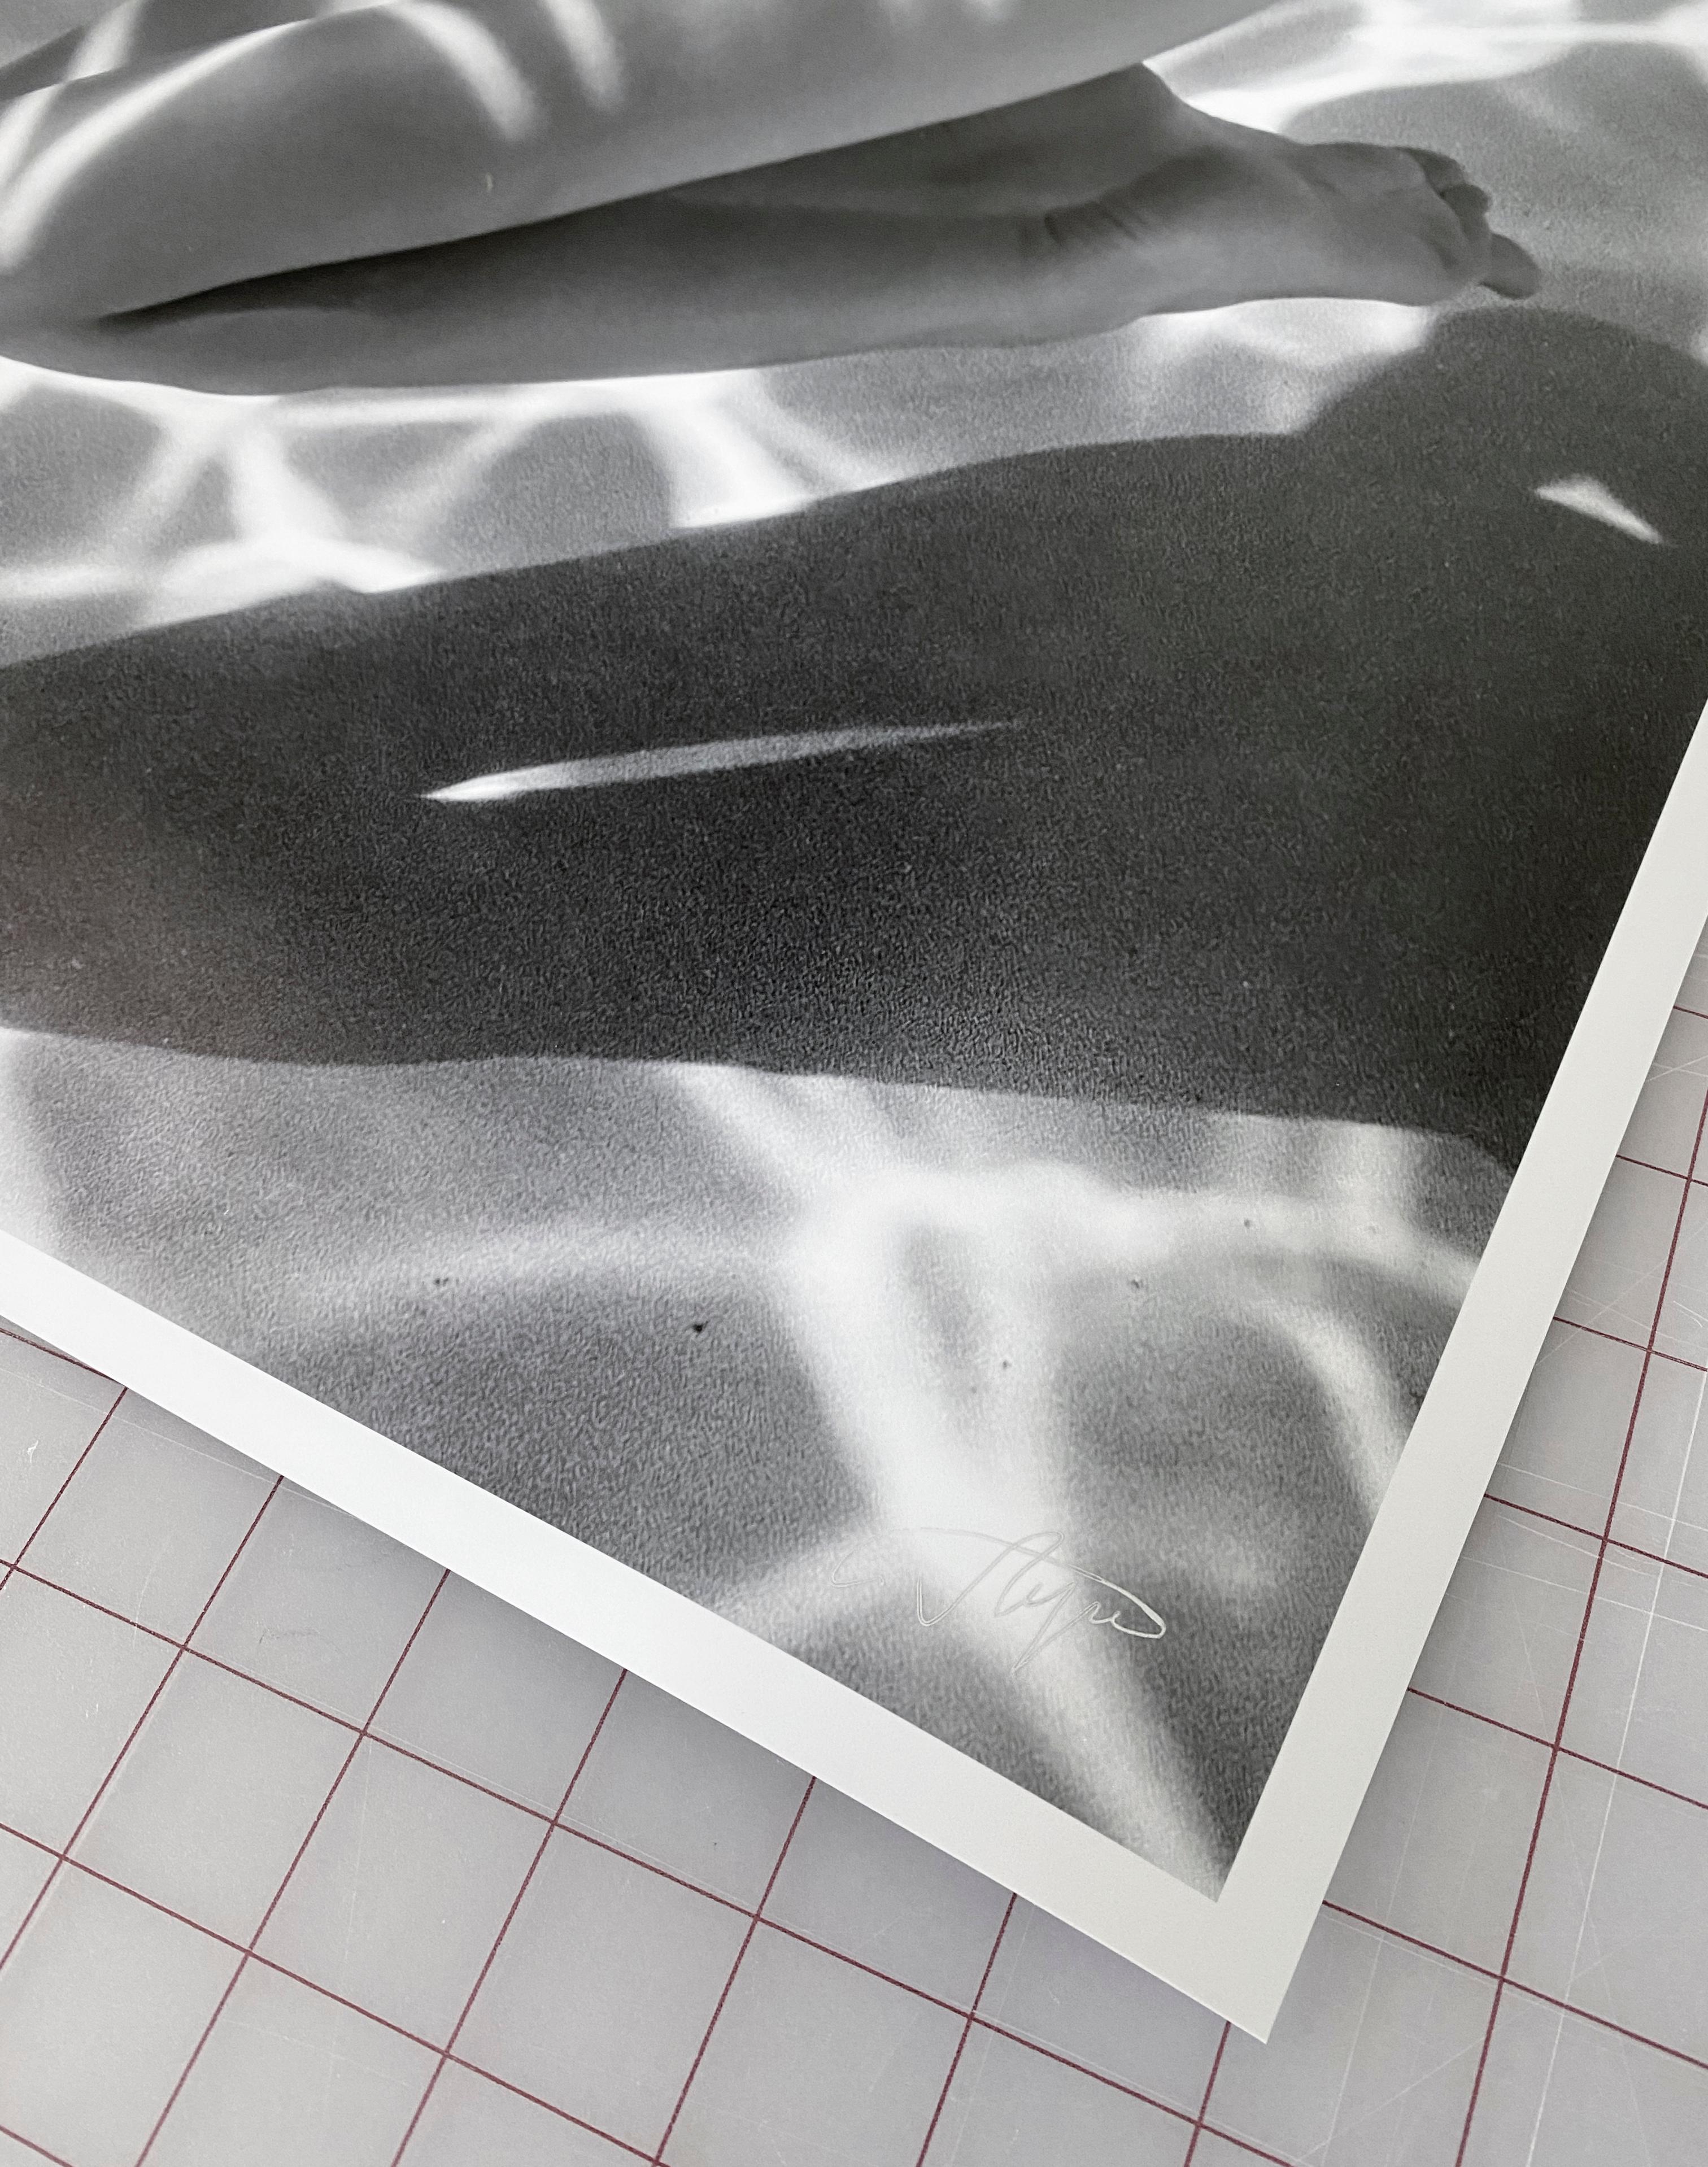 Wavering - underwater nude b&w photograph - archival pigment 35x23